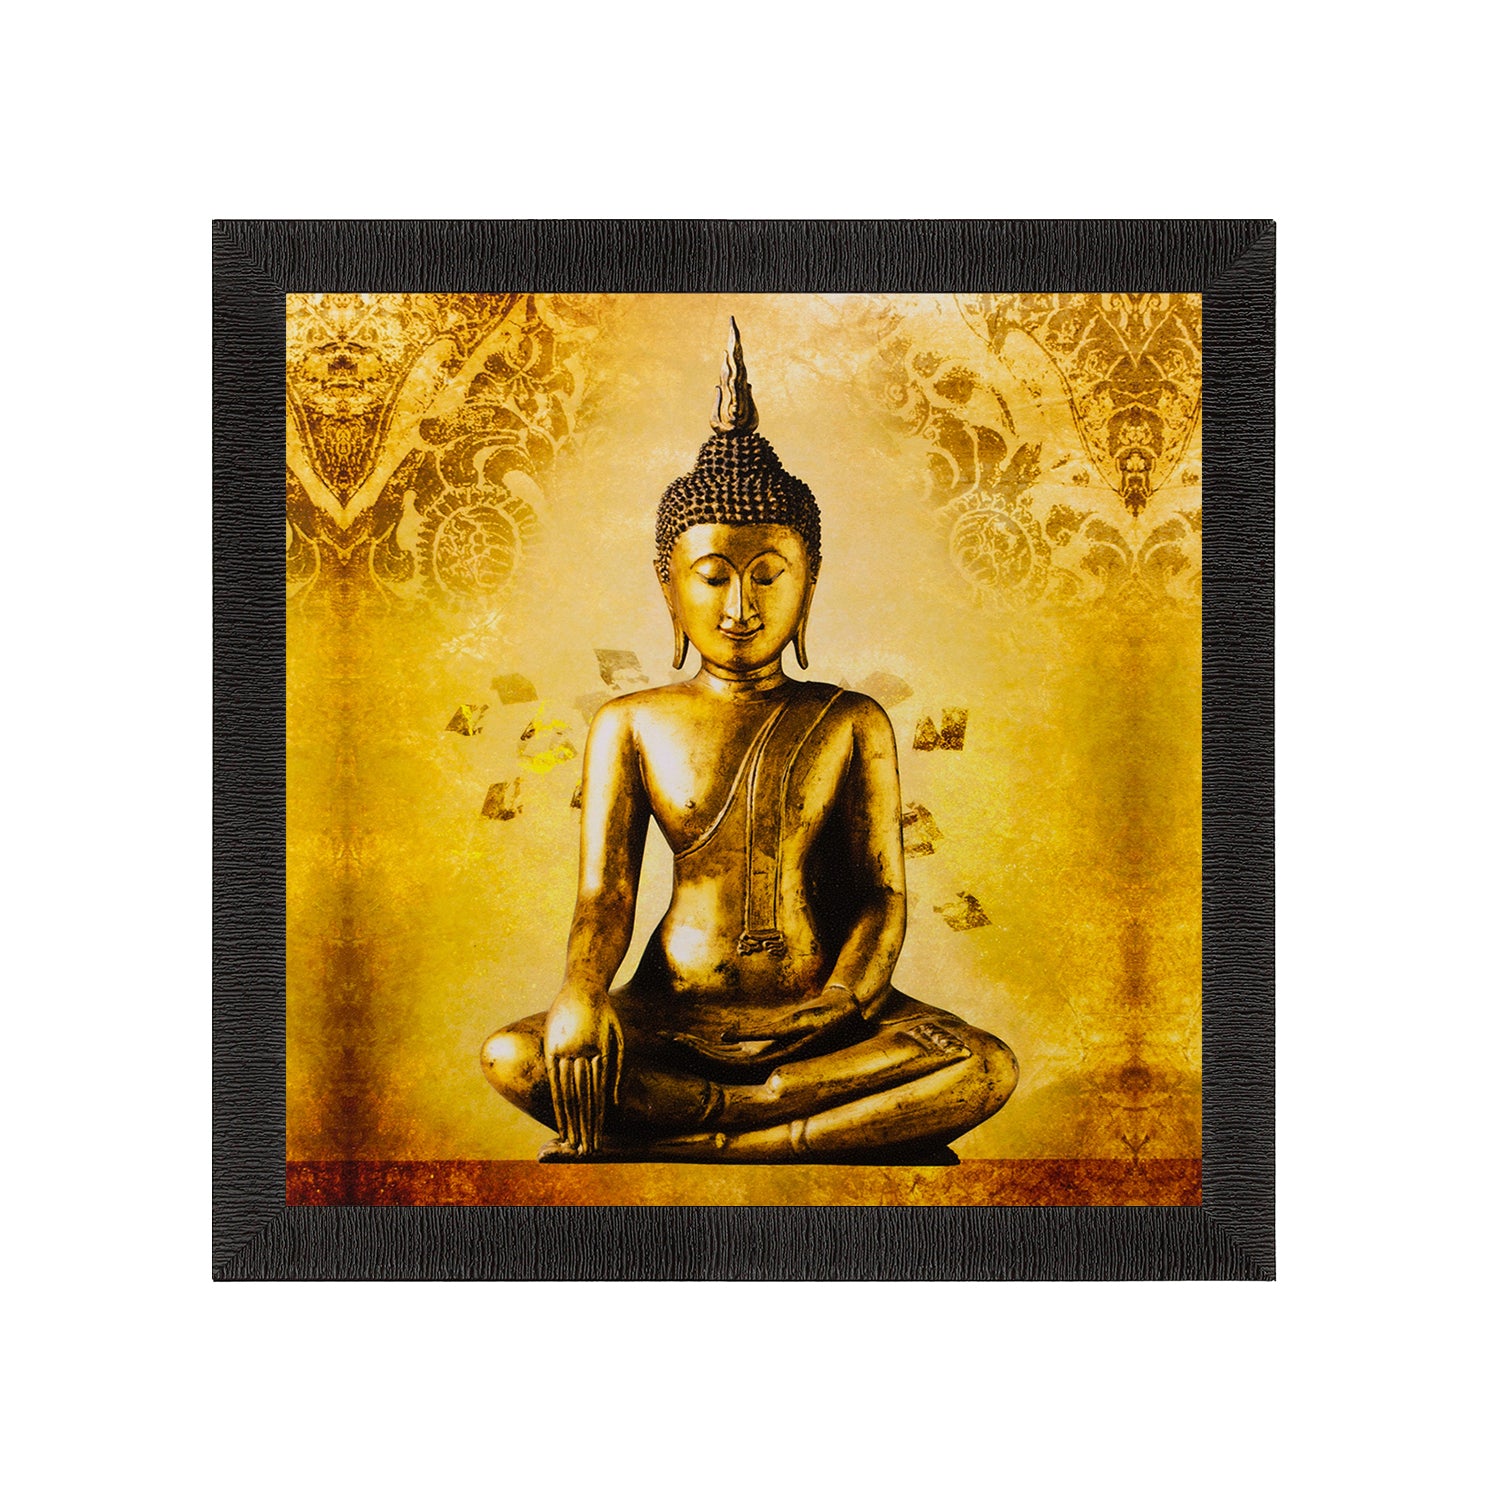 Meditating Buddha Painting Digital Printed Religious Wall Art